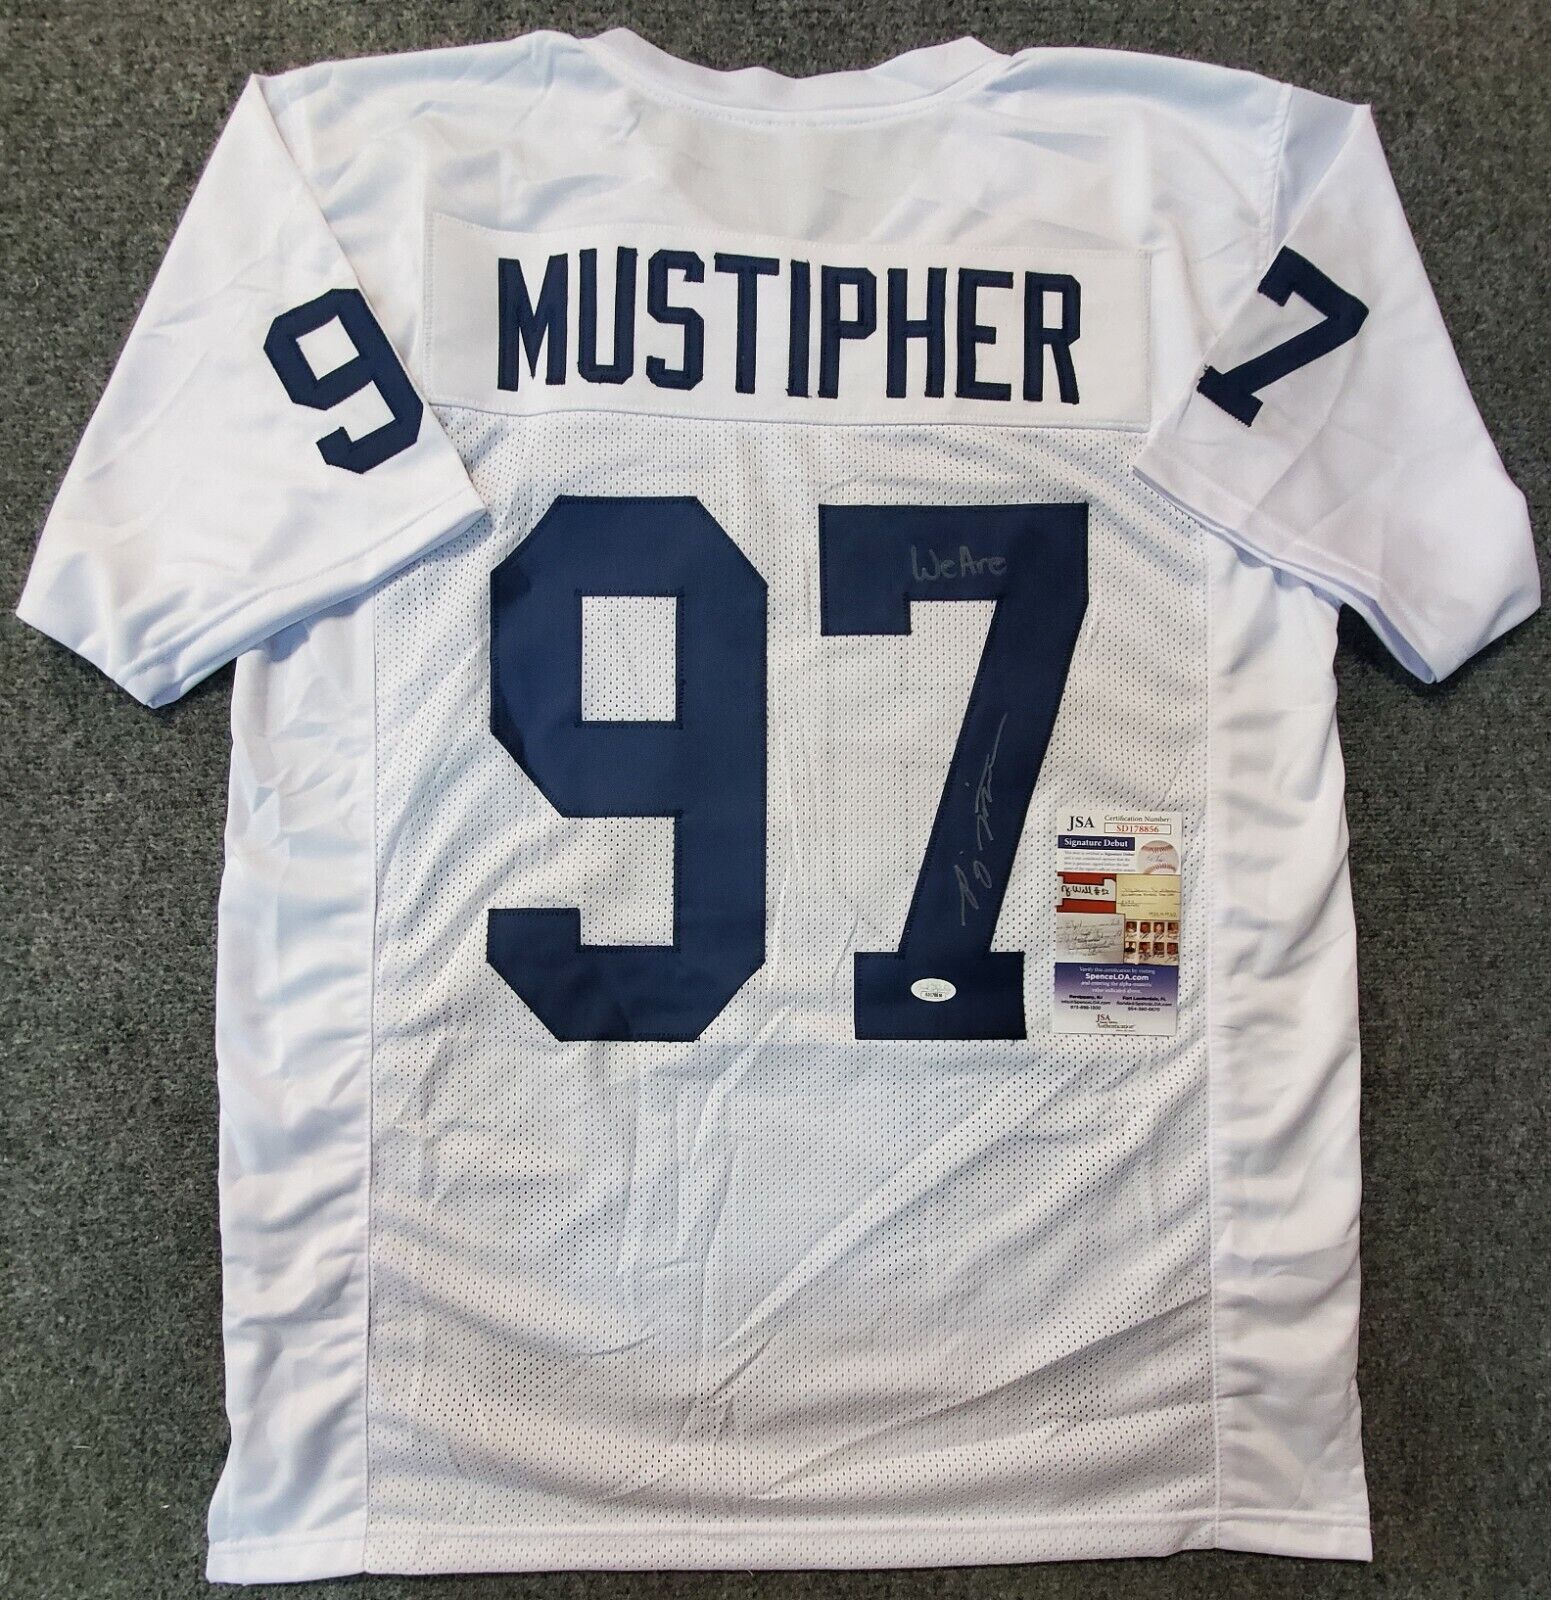 MVP Authentics Penn State Pj Mustipher Autographed Signed Inscribed Jersey Jsa Coa 72 sports jersey framing , jersey framing